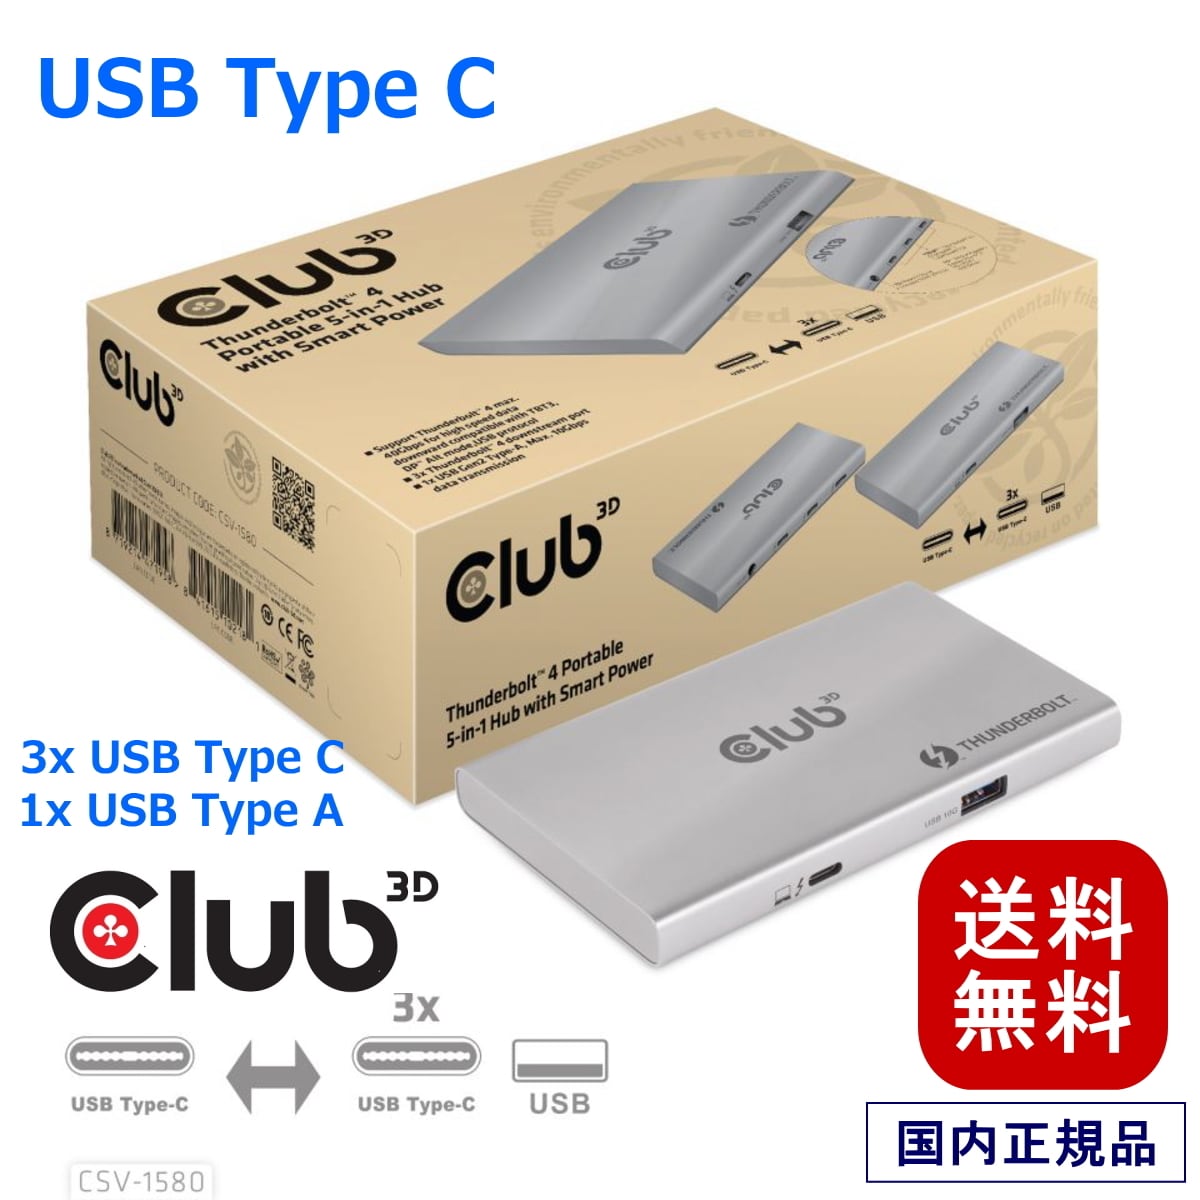 ORICO TYPE C 10Gbps USBハブ 11-in-1